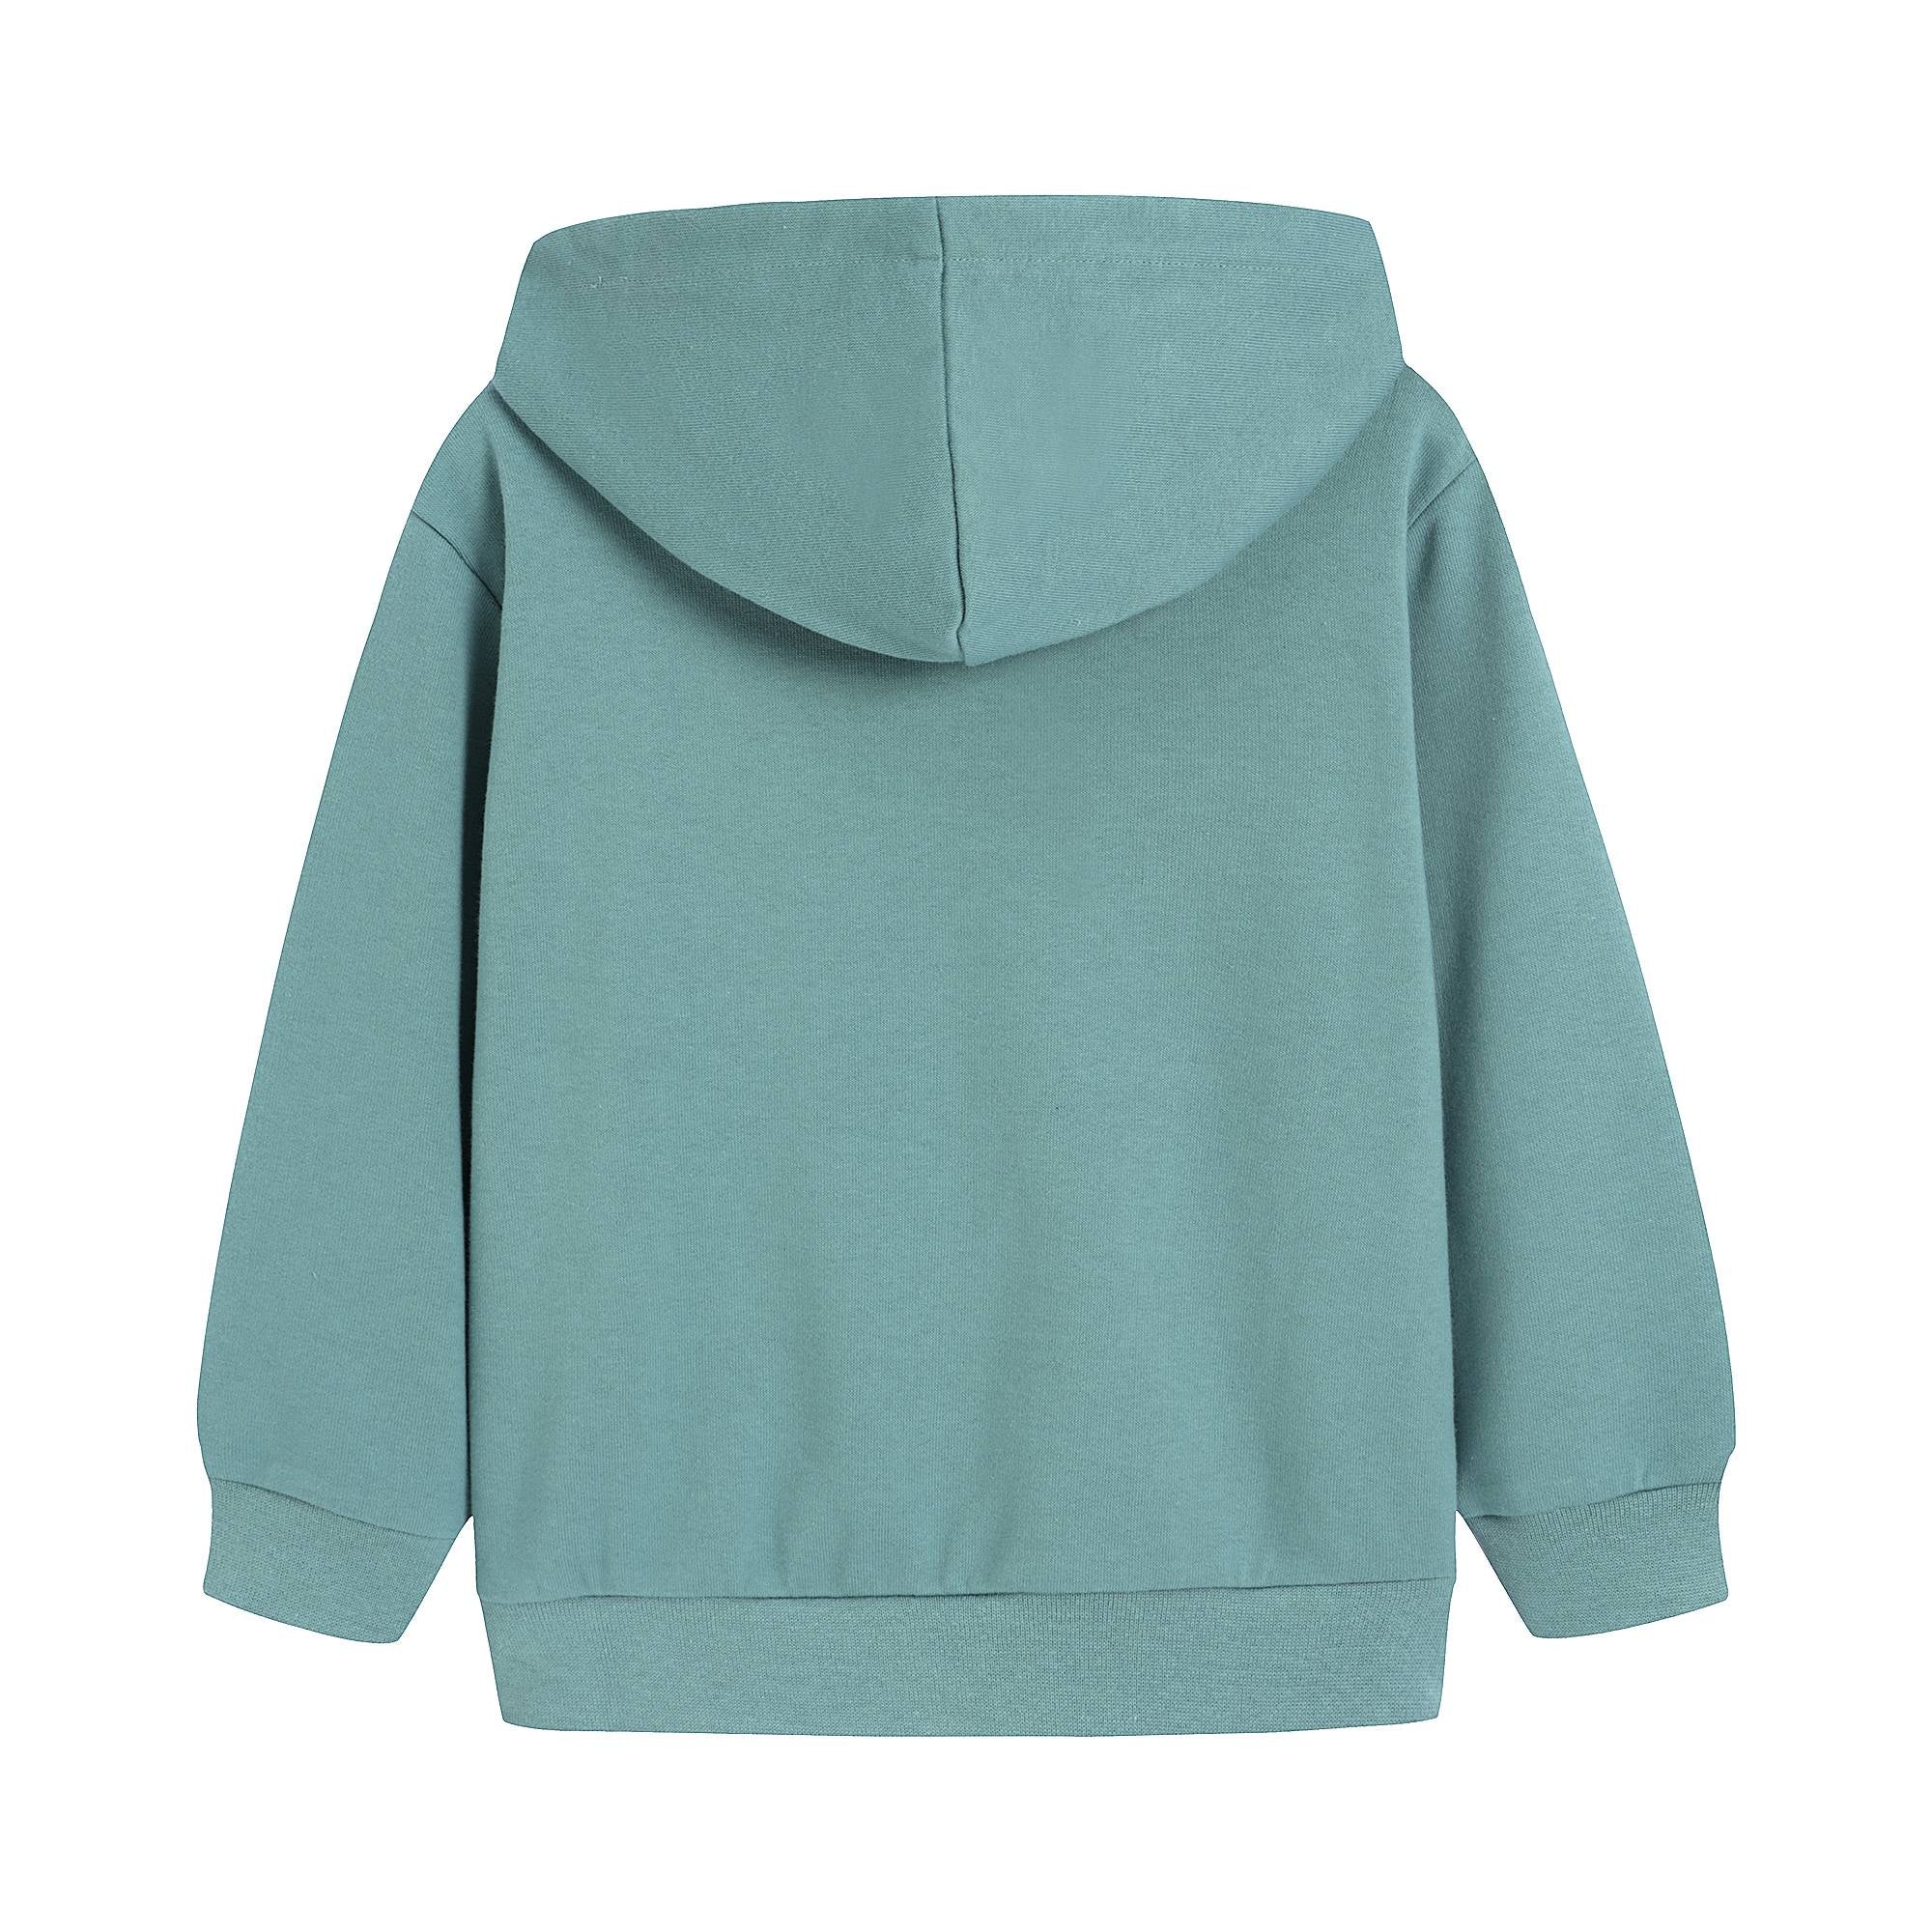 Boys & Girls Green Hooded Cotton Sweatshirt